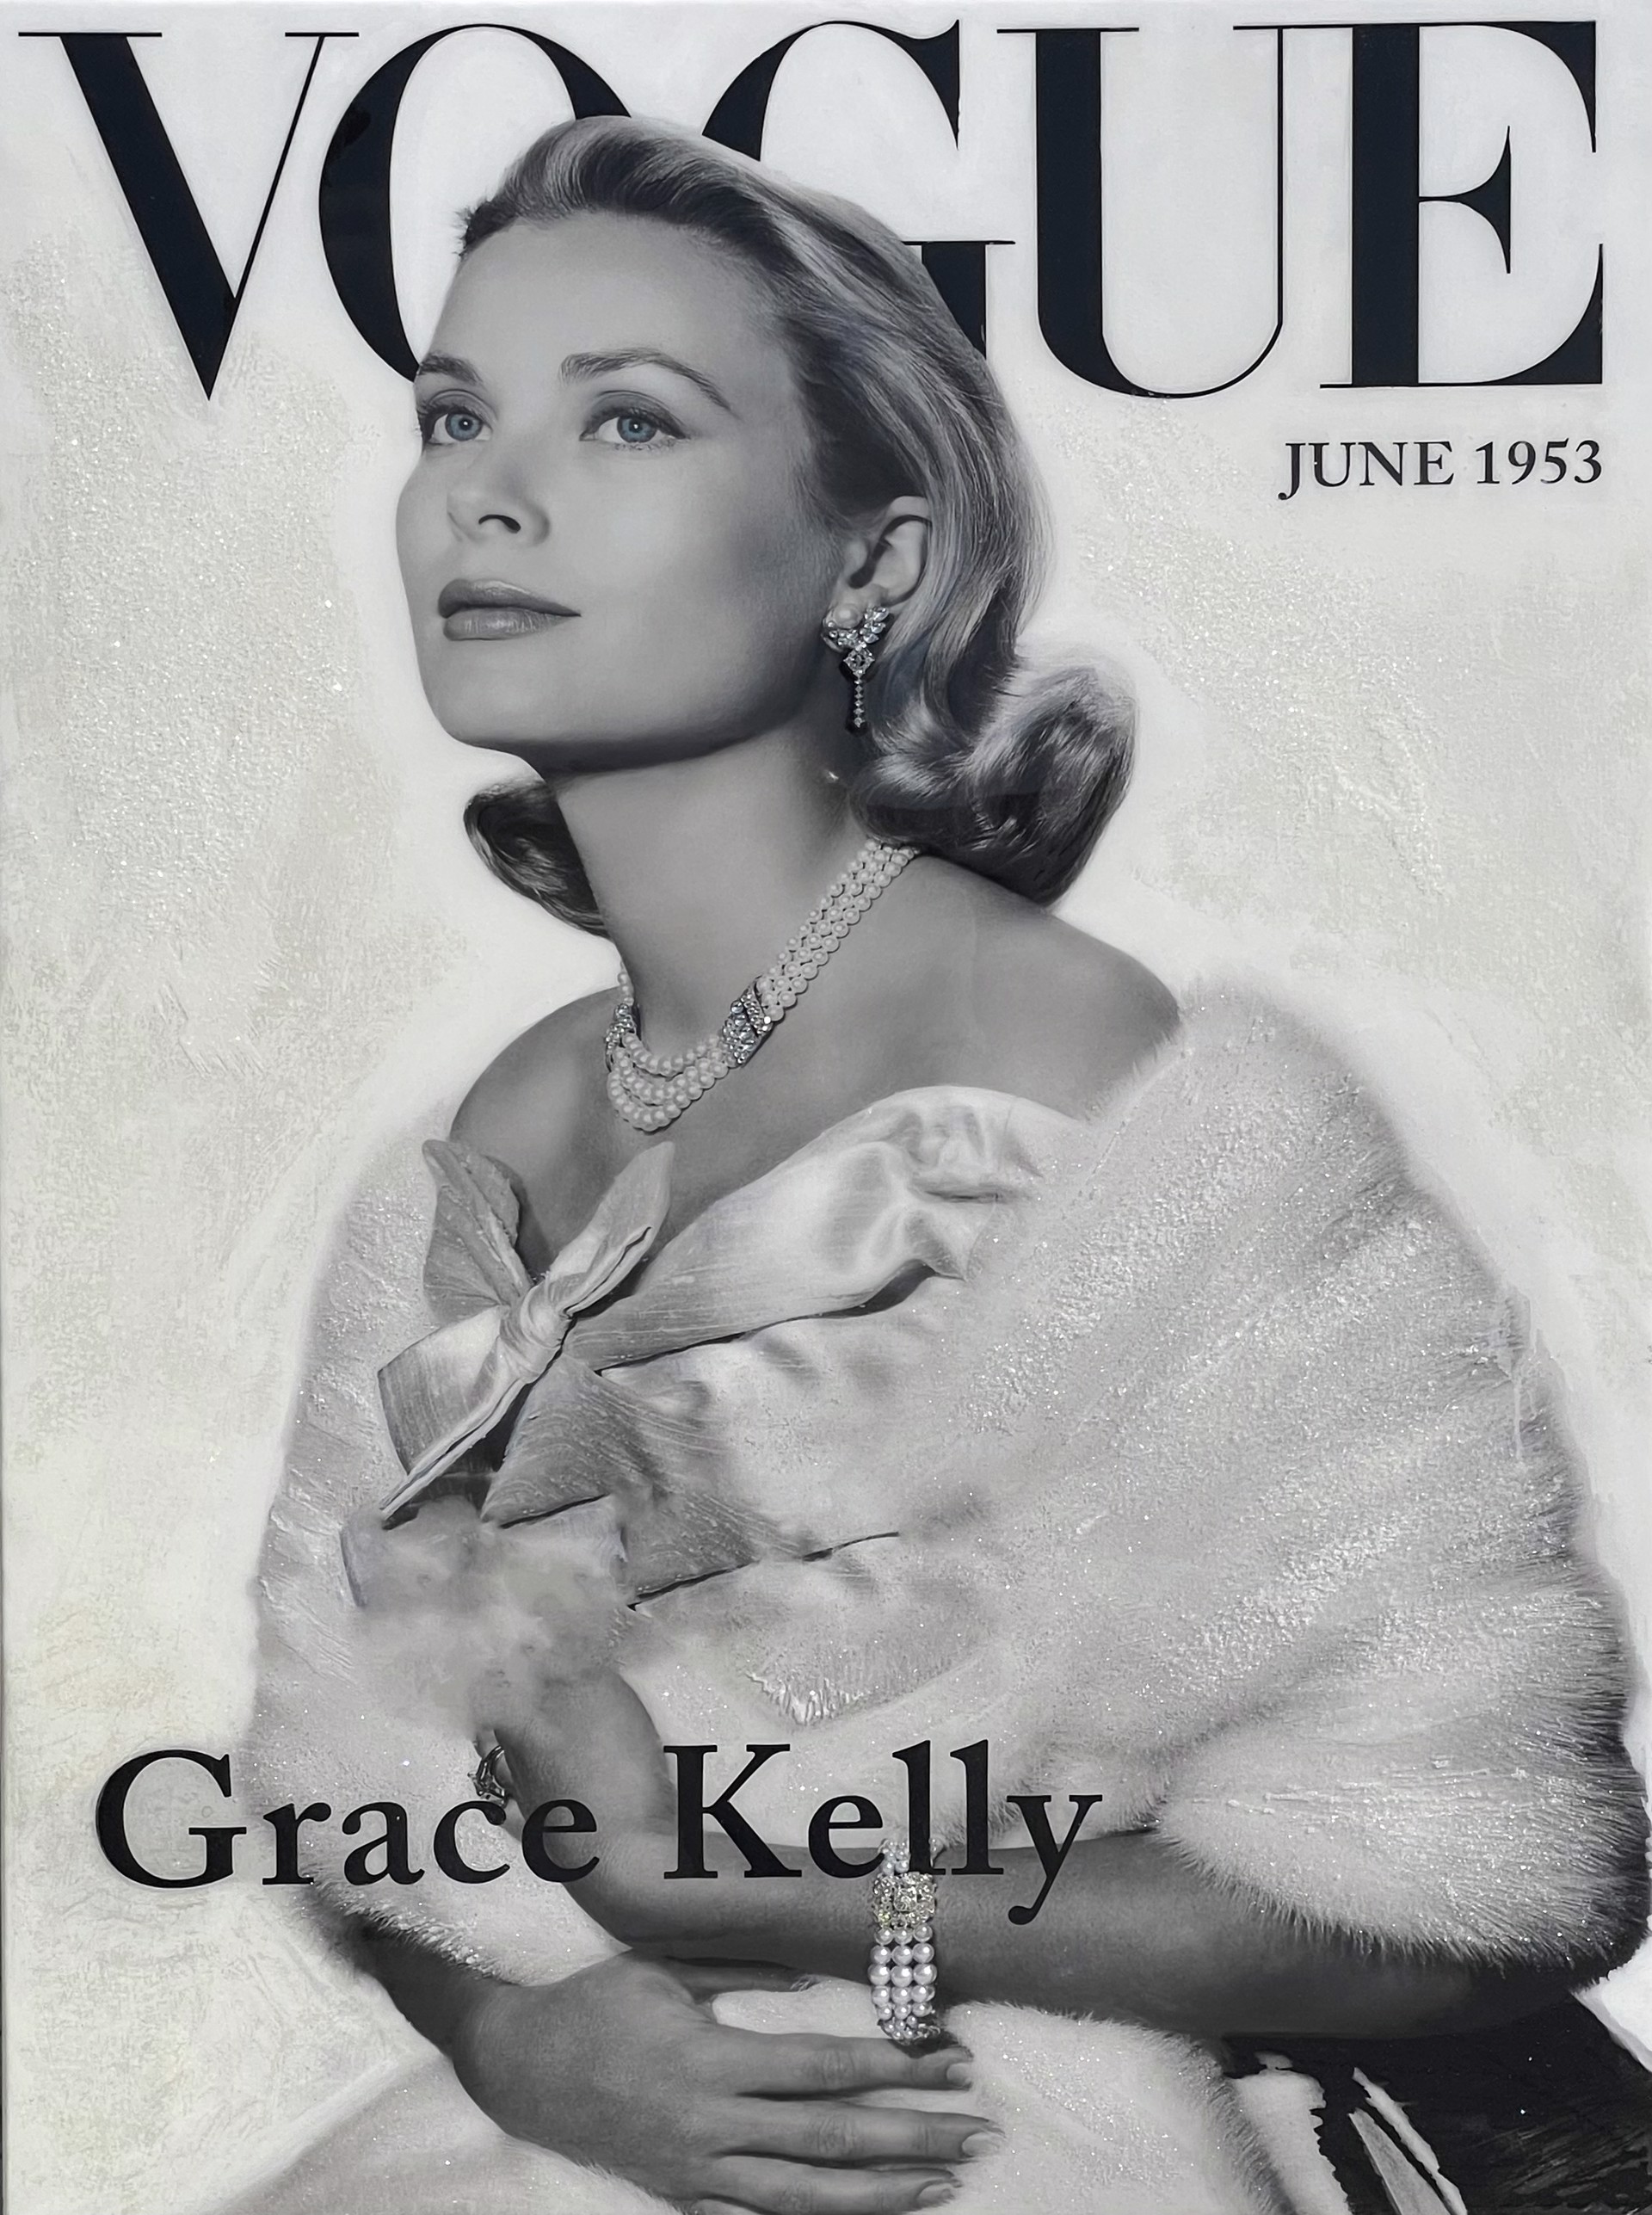 Vogue - Grace Kelly by Dean Johnson